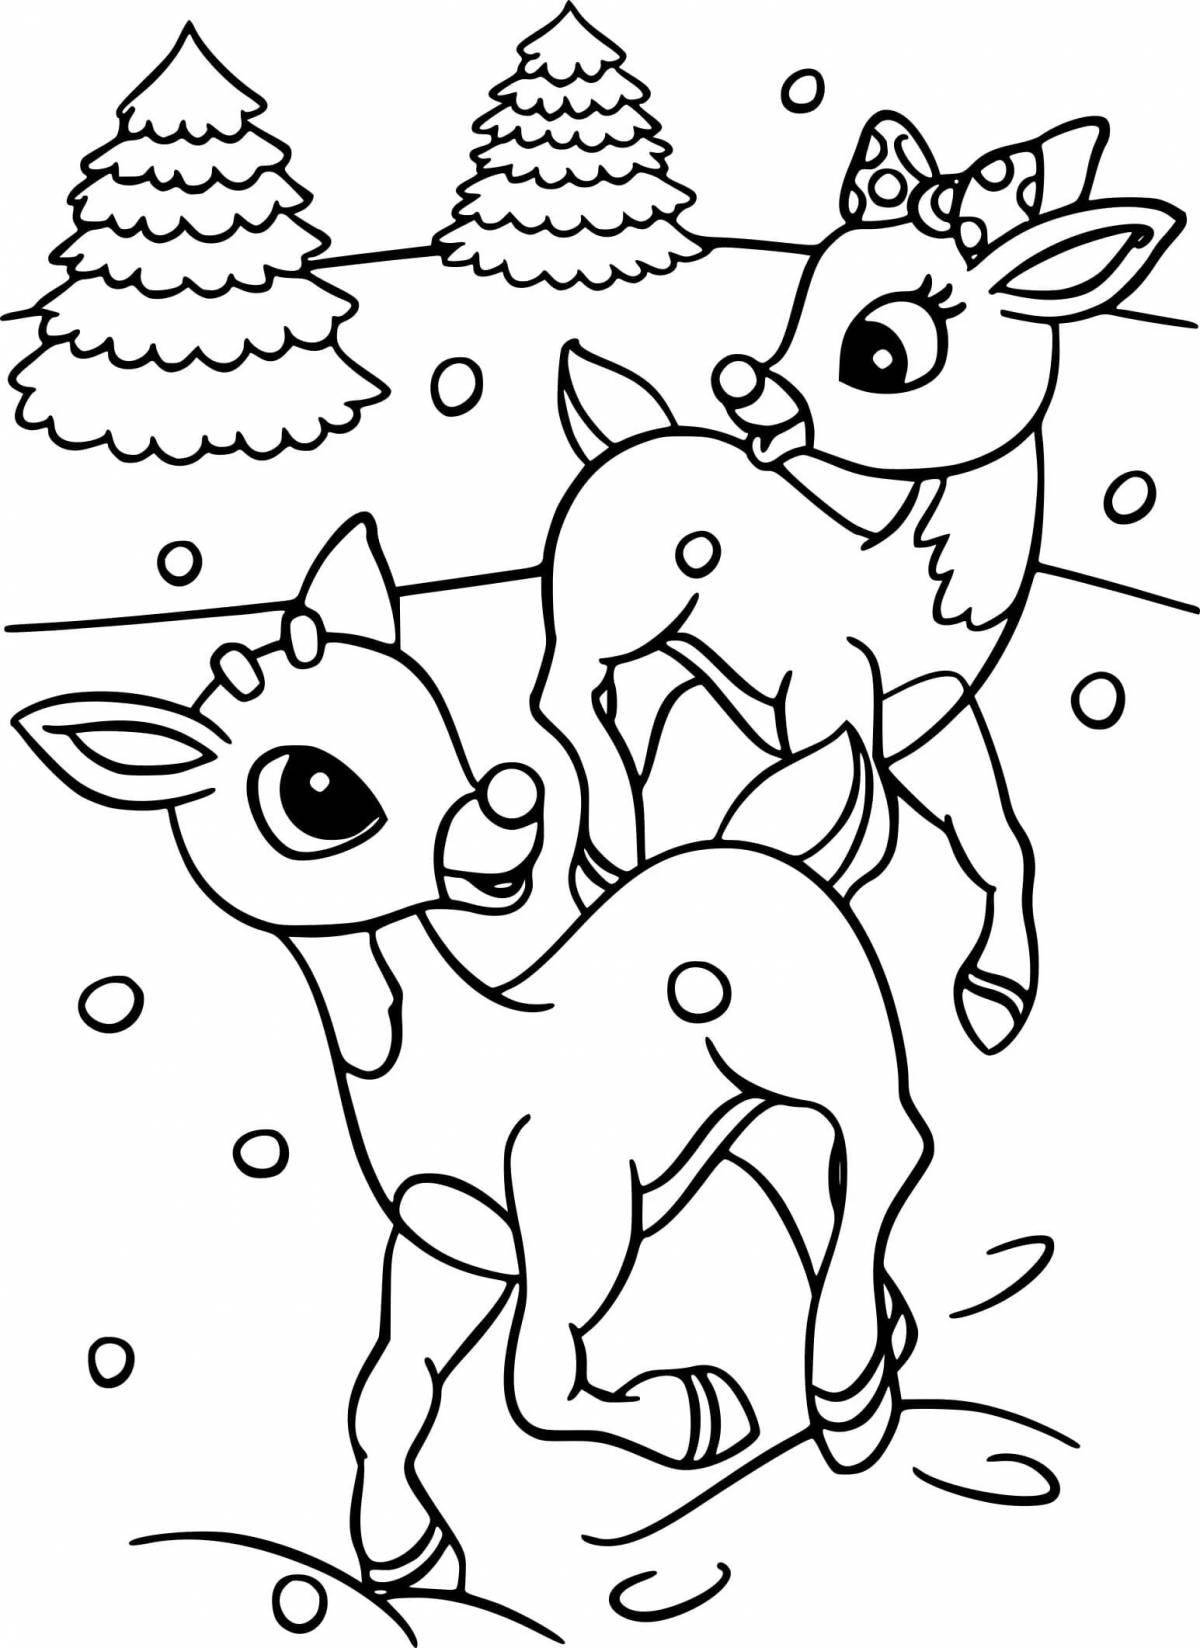 Sweet deer coloring book for kids